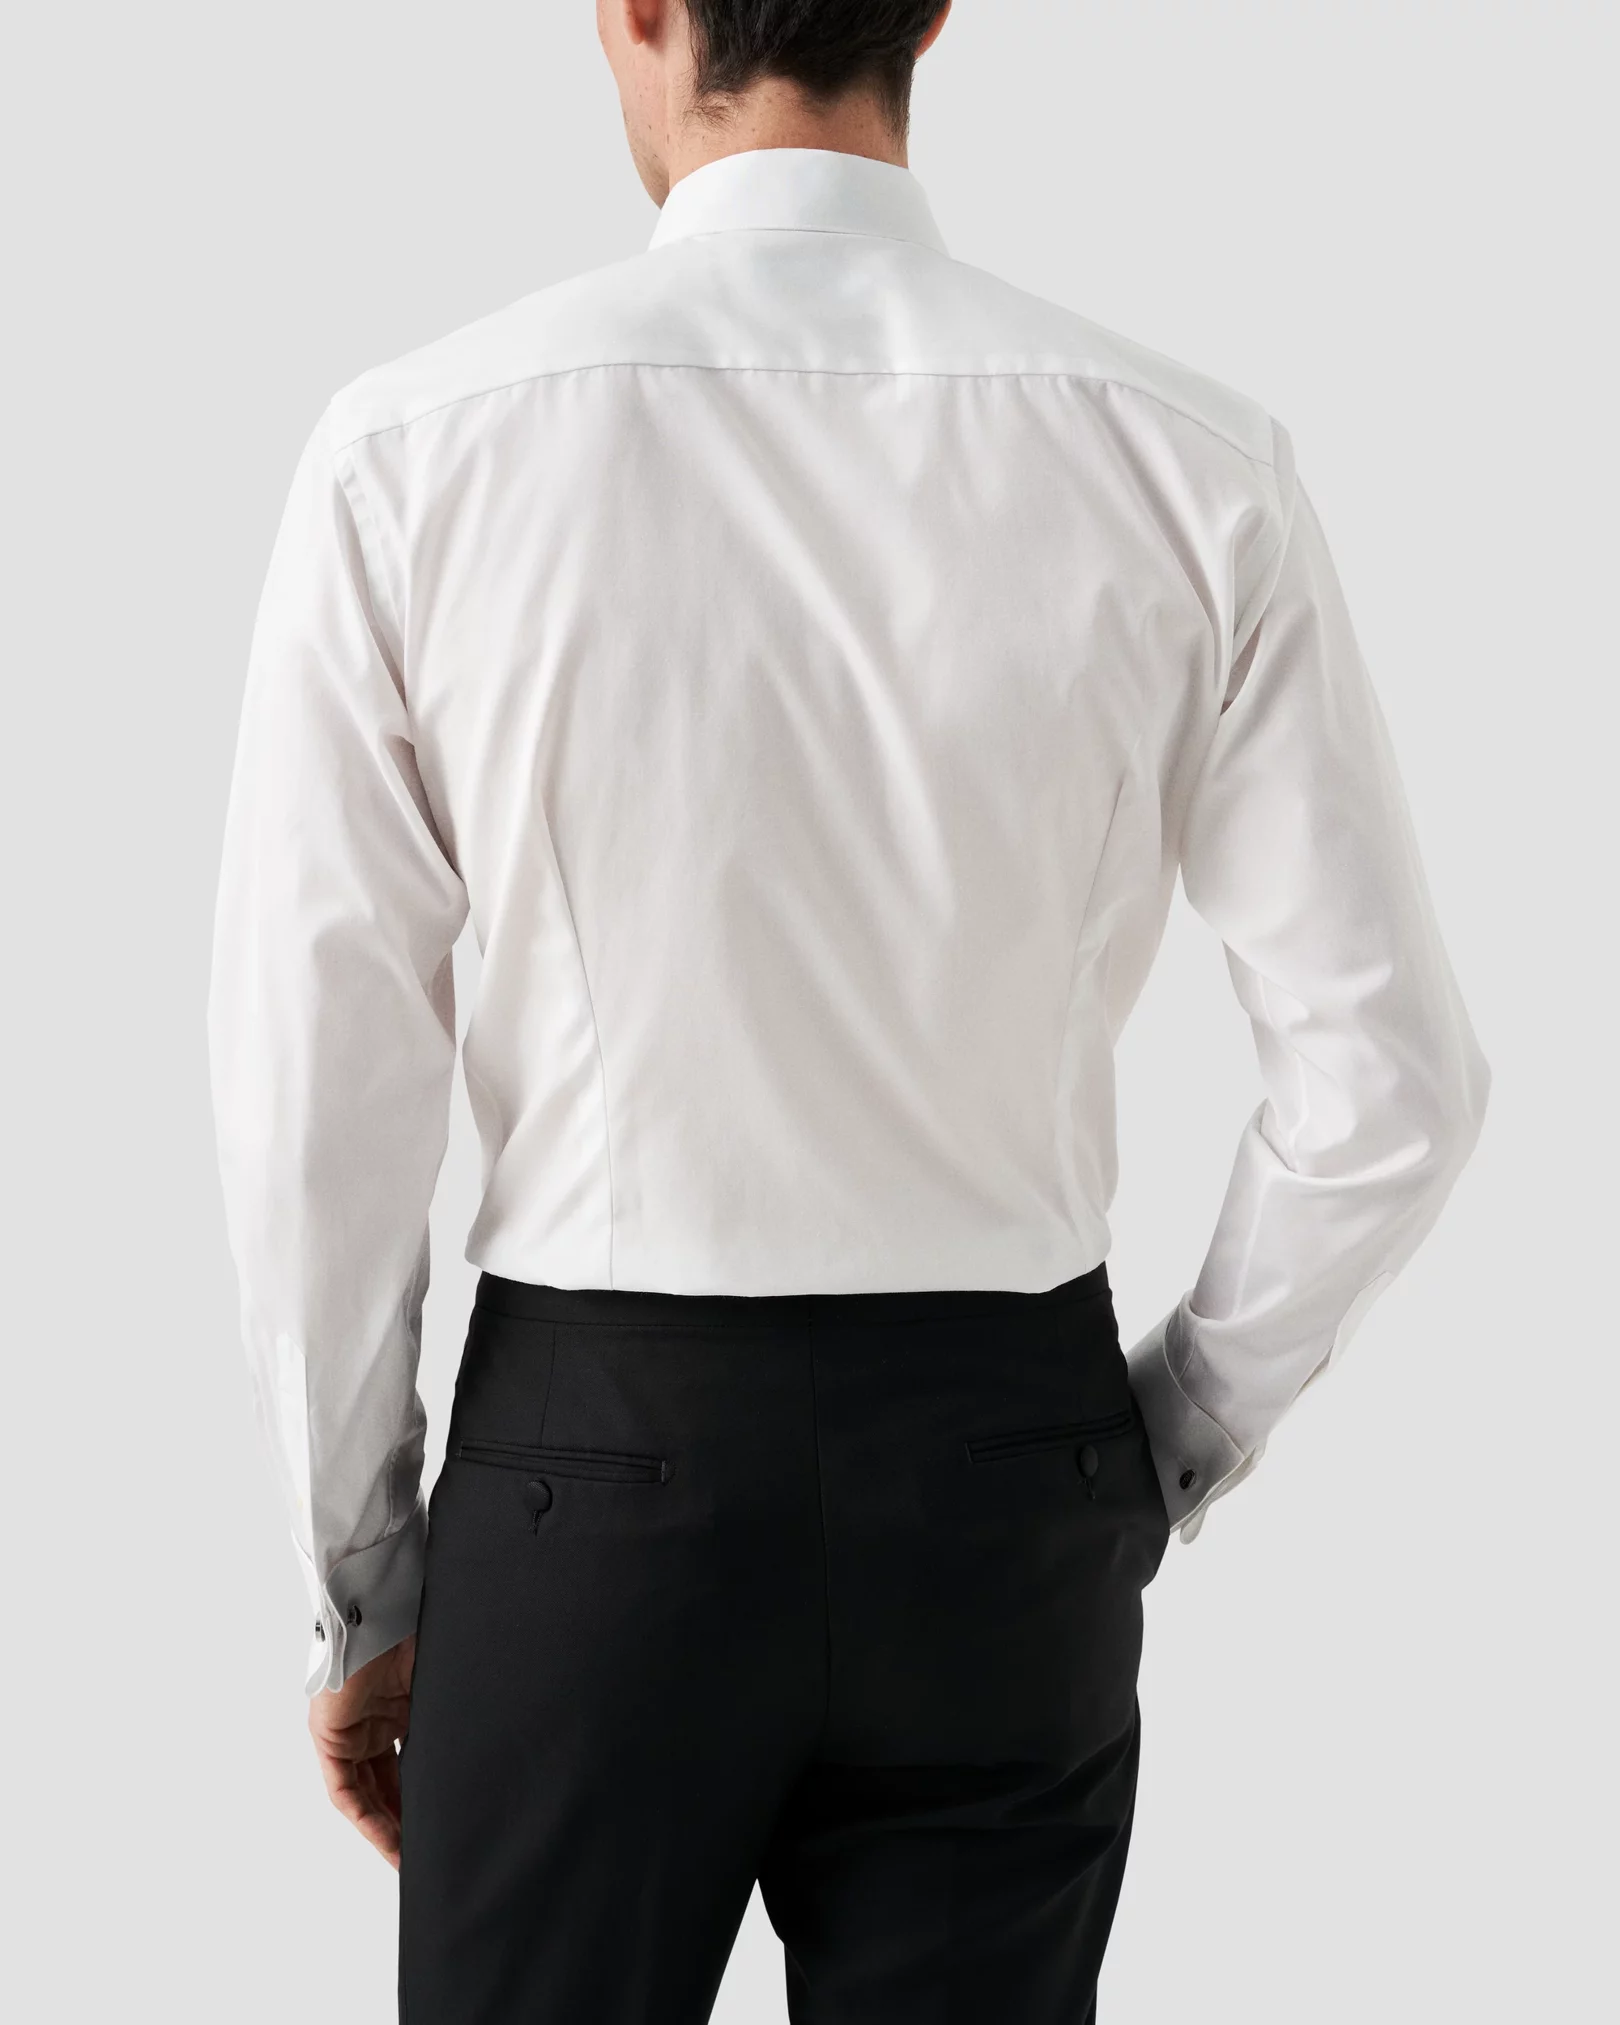 Eton - pique black tie shirt